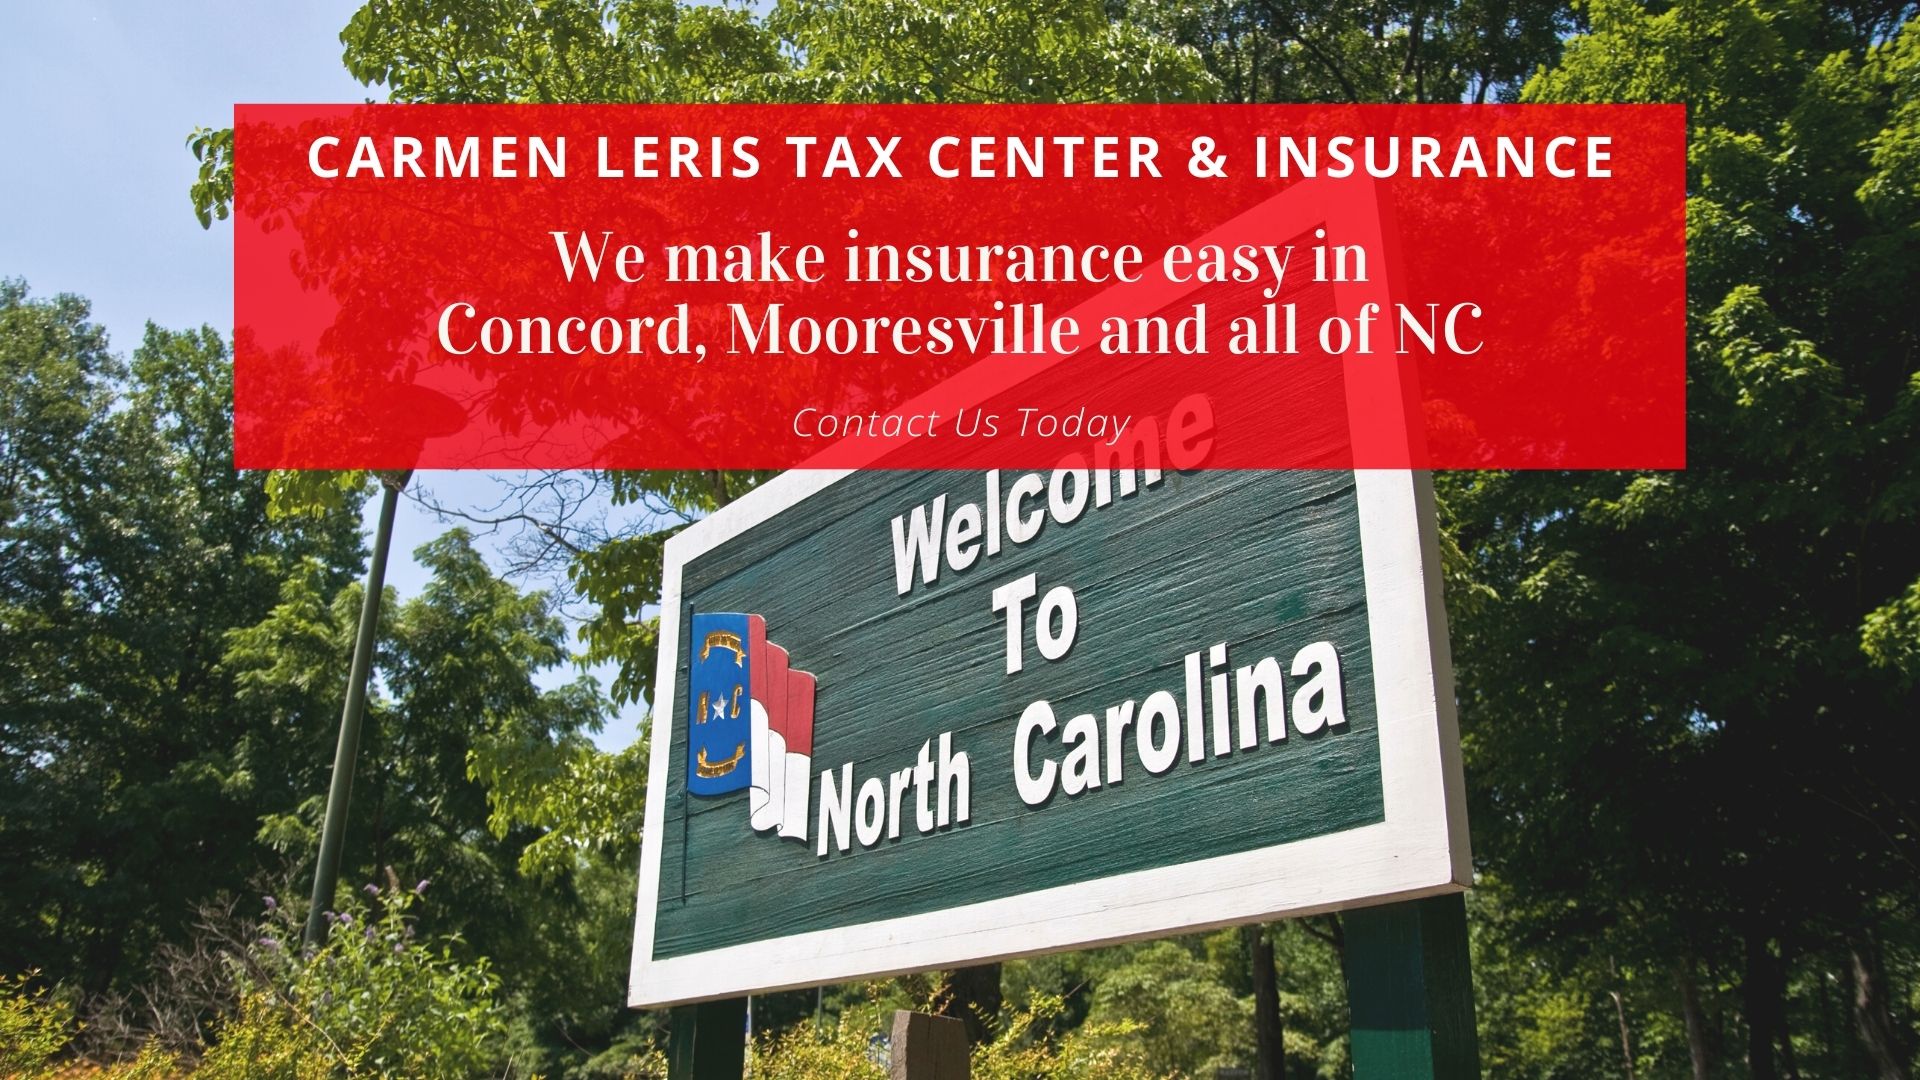 Carmen Leris Tax Center & Insurance